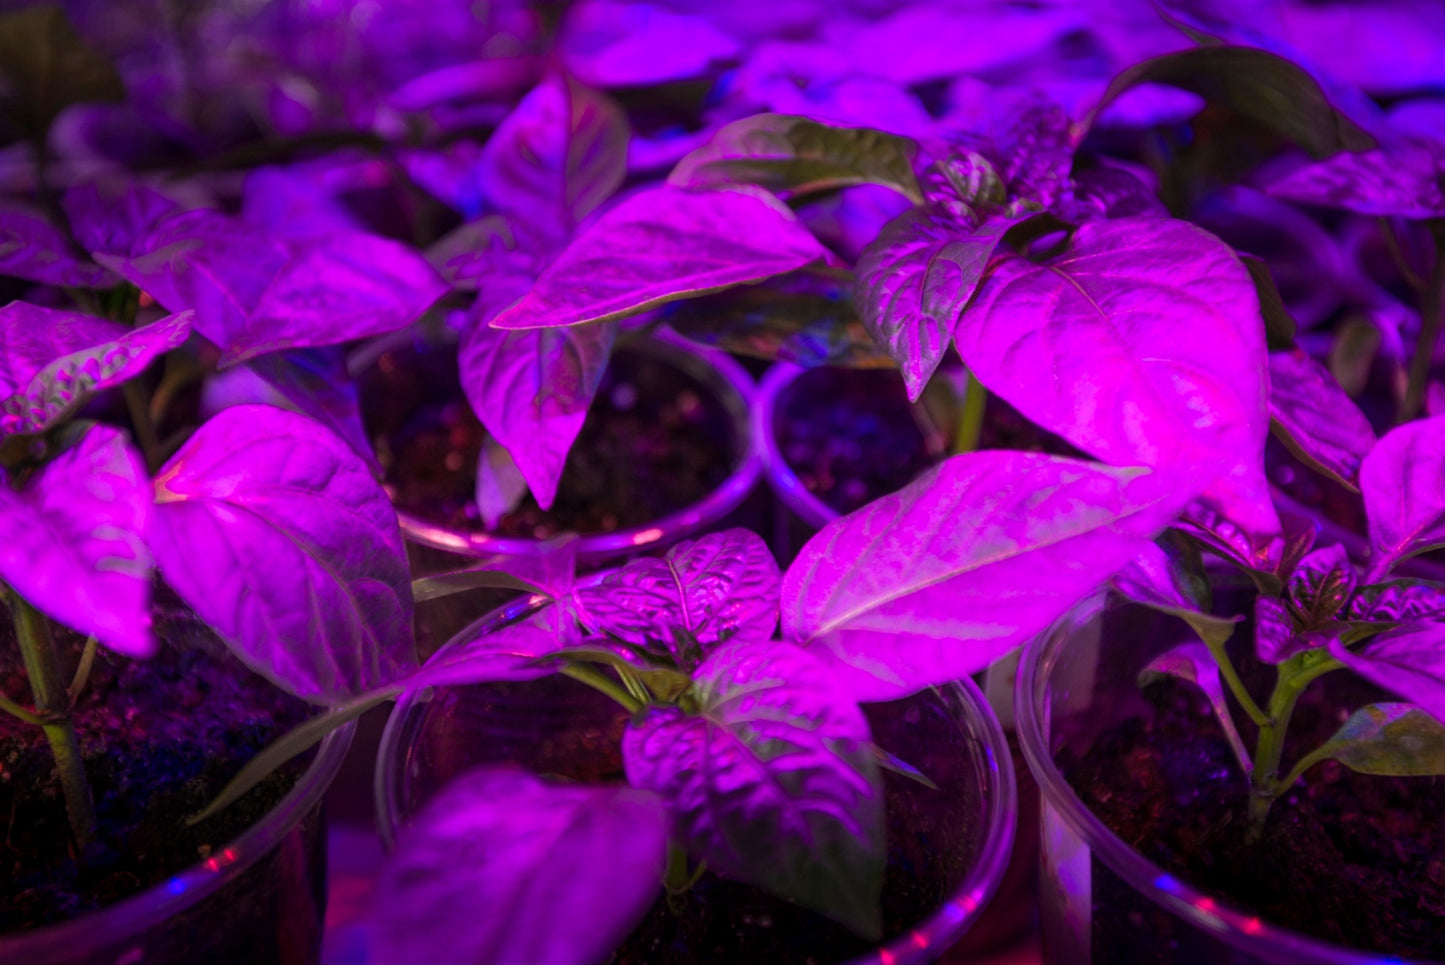 Chip LED de potencia 3w | Cultivo de plantas | Full spectrum | Espectro completo invernadero